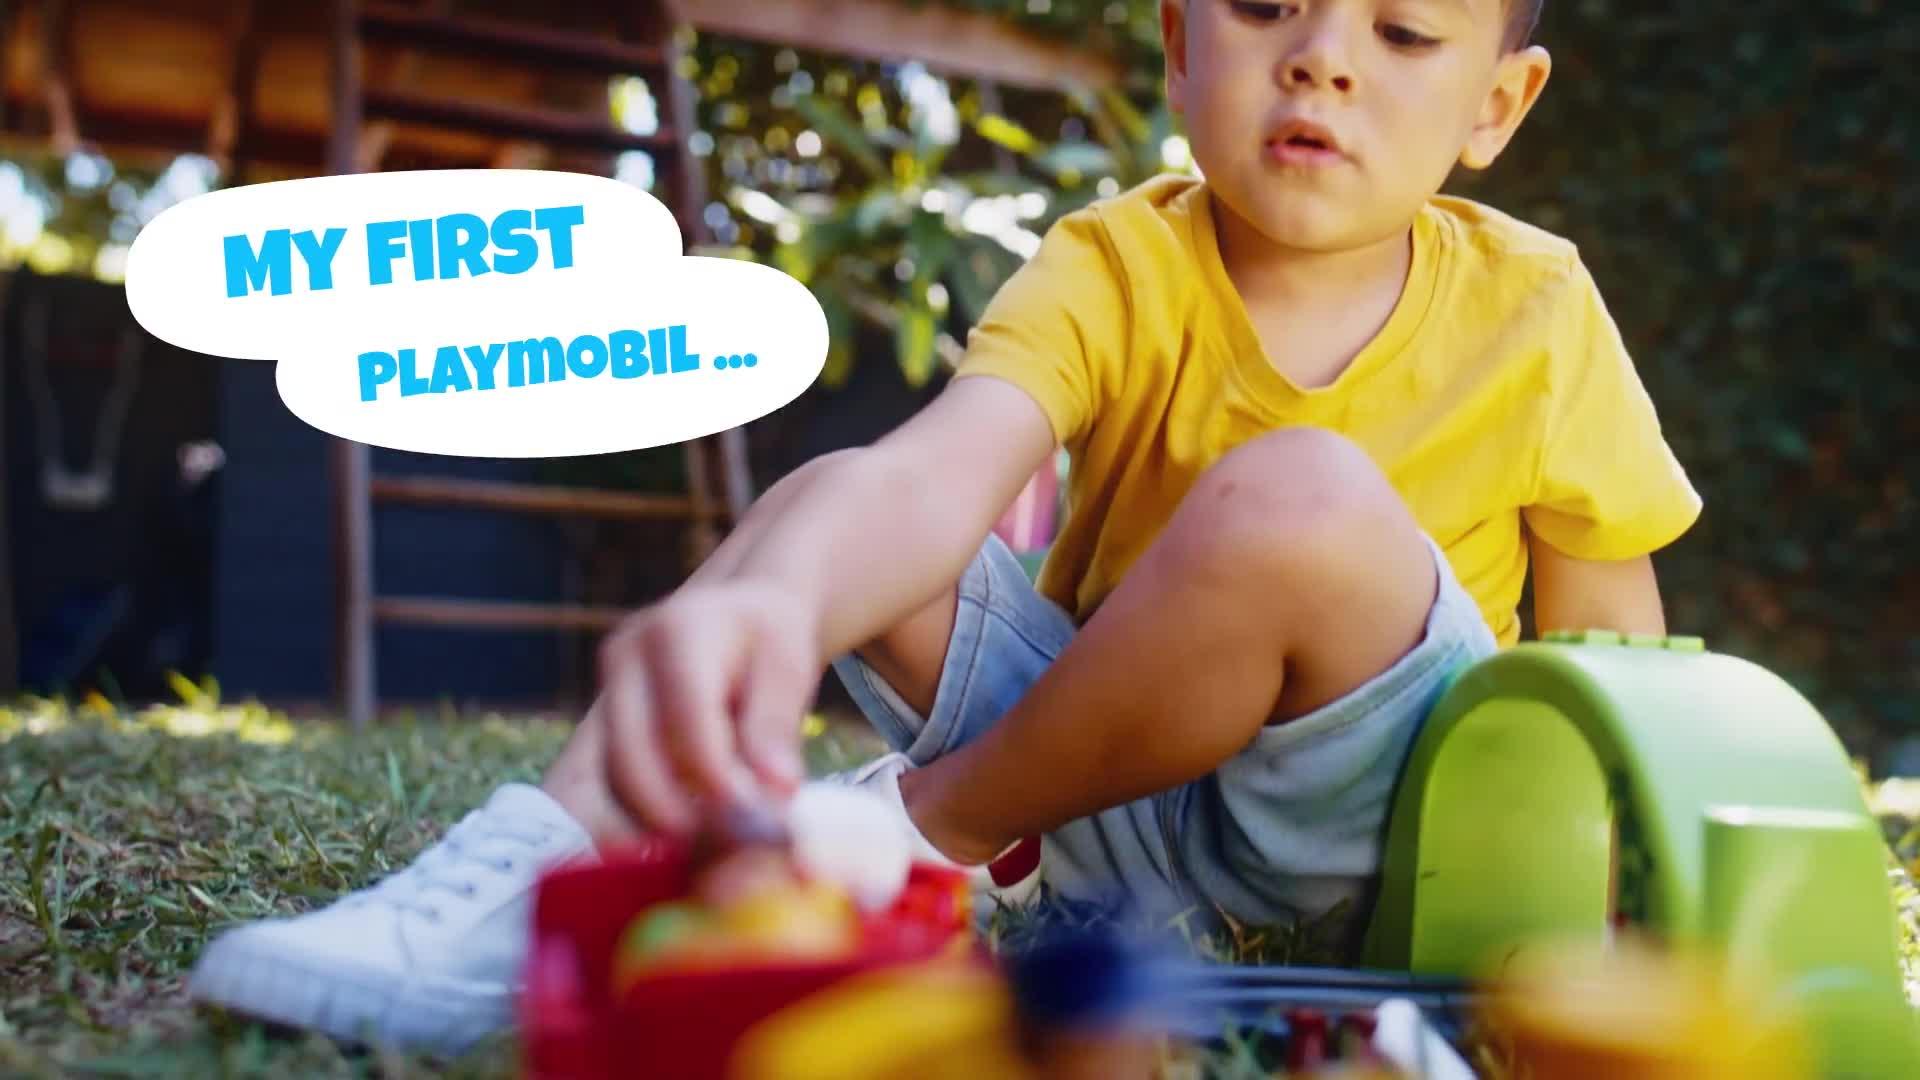  Playmobil 1.2.3 Aqua Water Slide with Sea Animals